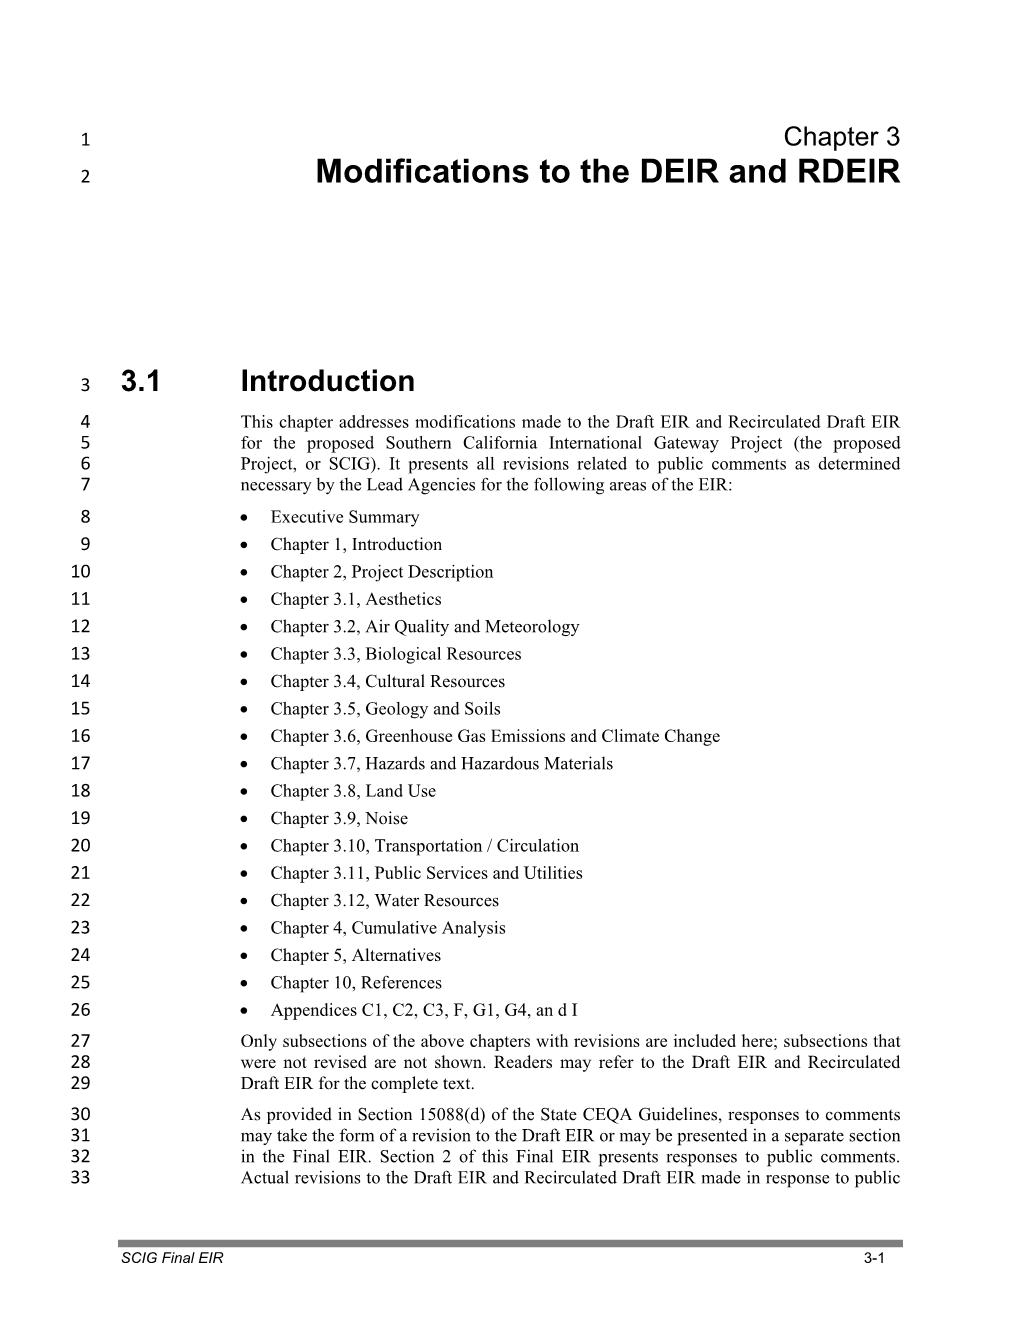 Modifications to the DEIR and RDEIR